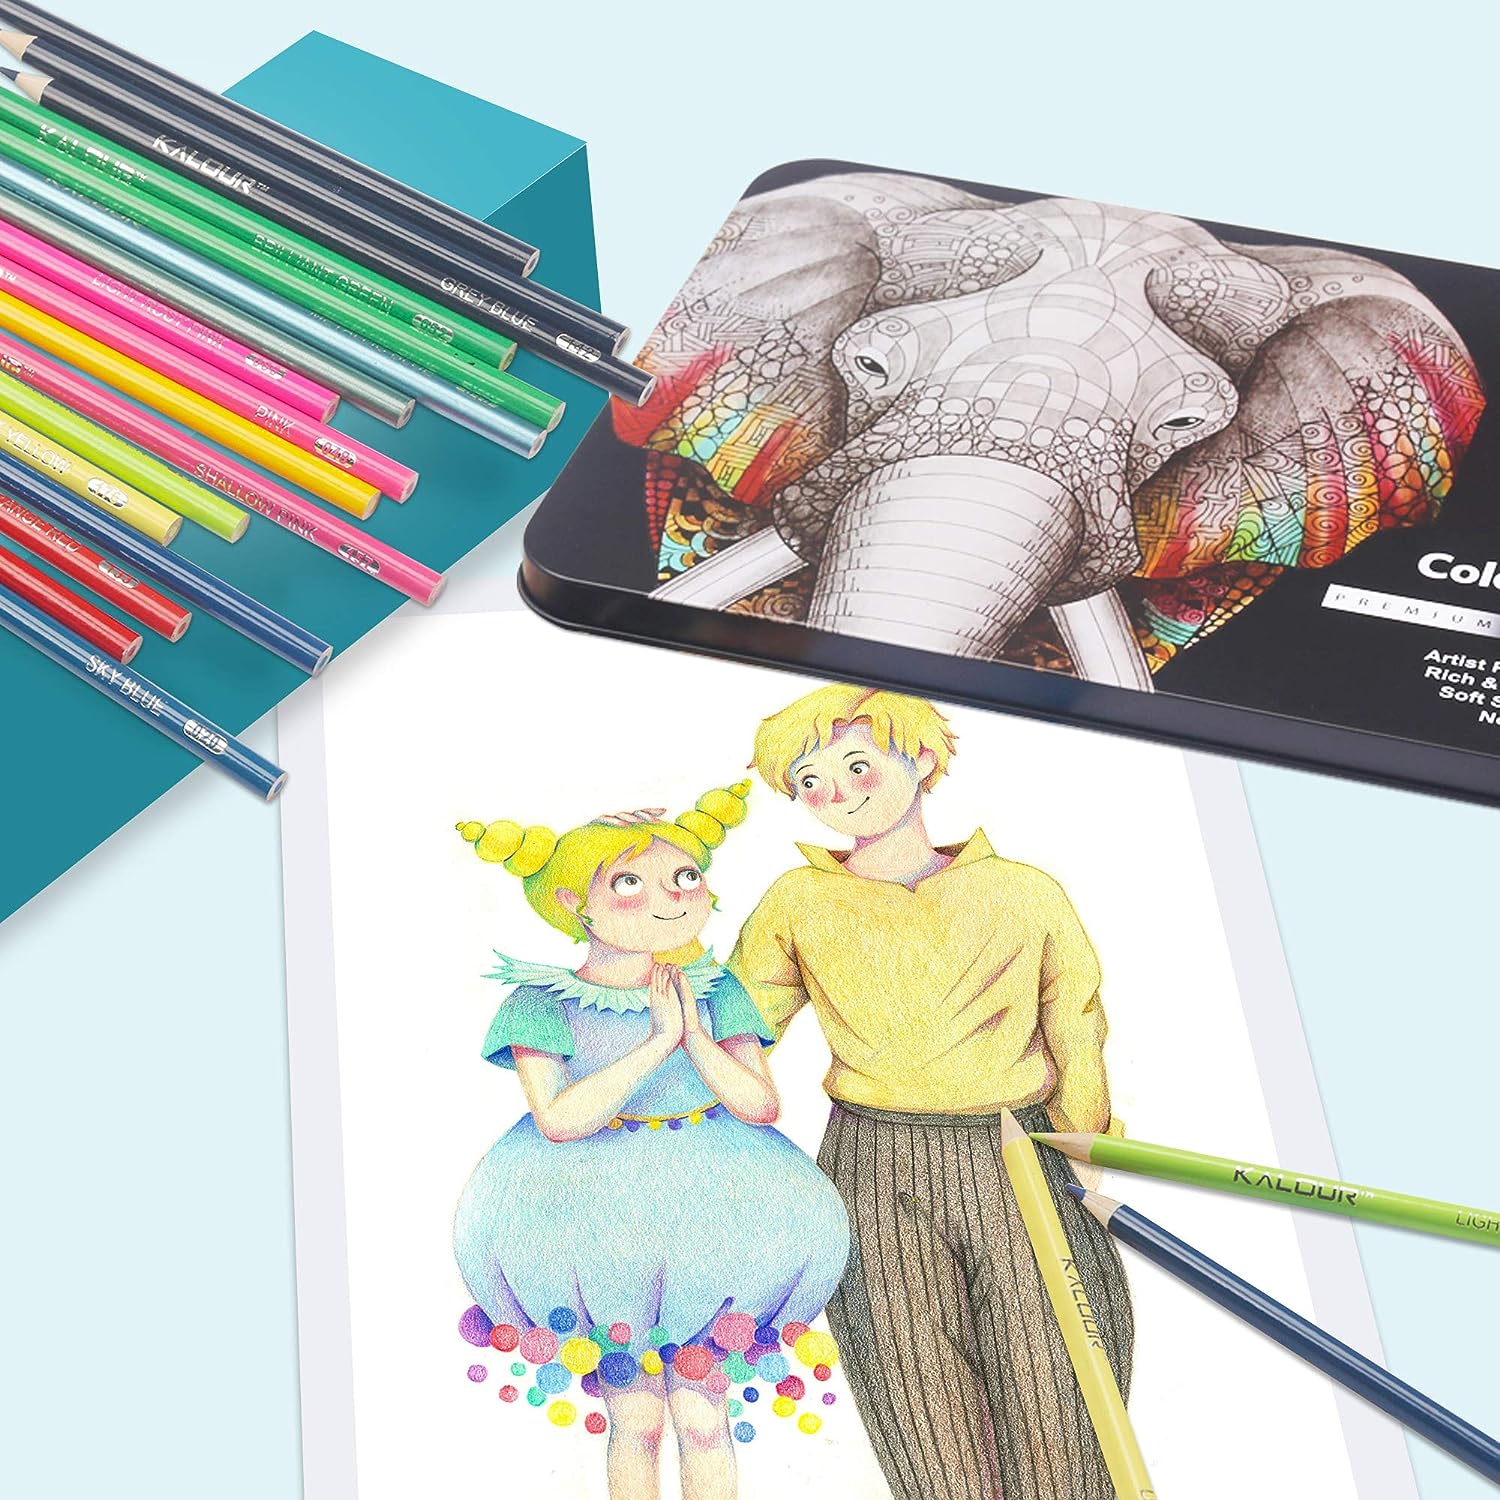 KALOUR Premium Colored Pencils for Adult Coloring Book,Set of 72 Colors,Zipper Slot Pencil Case,with Sharpener,Soft Core,7 Metallic Color